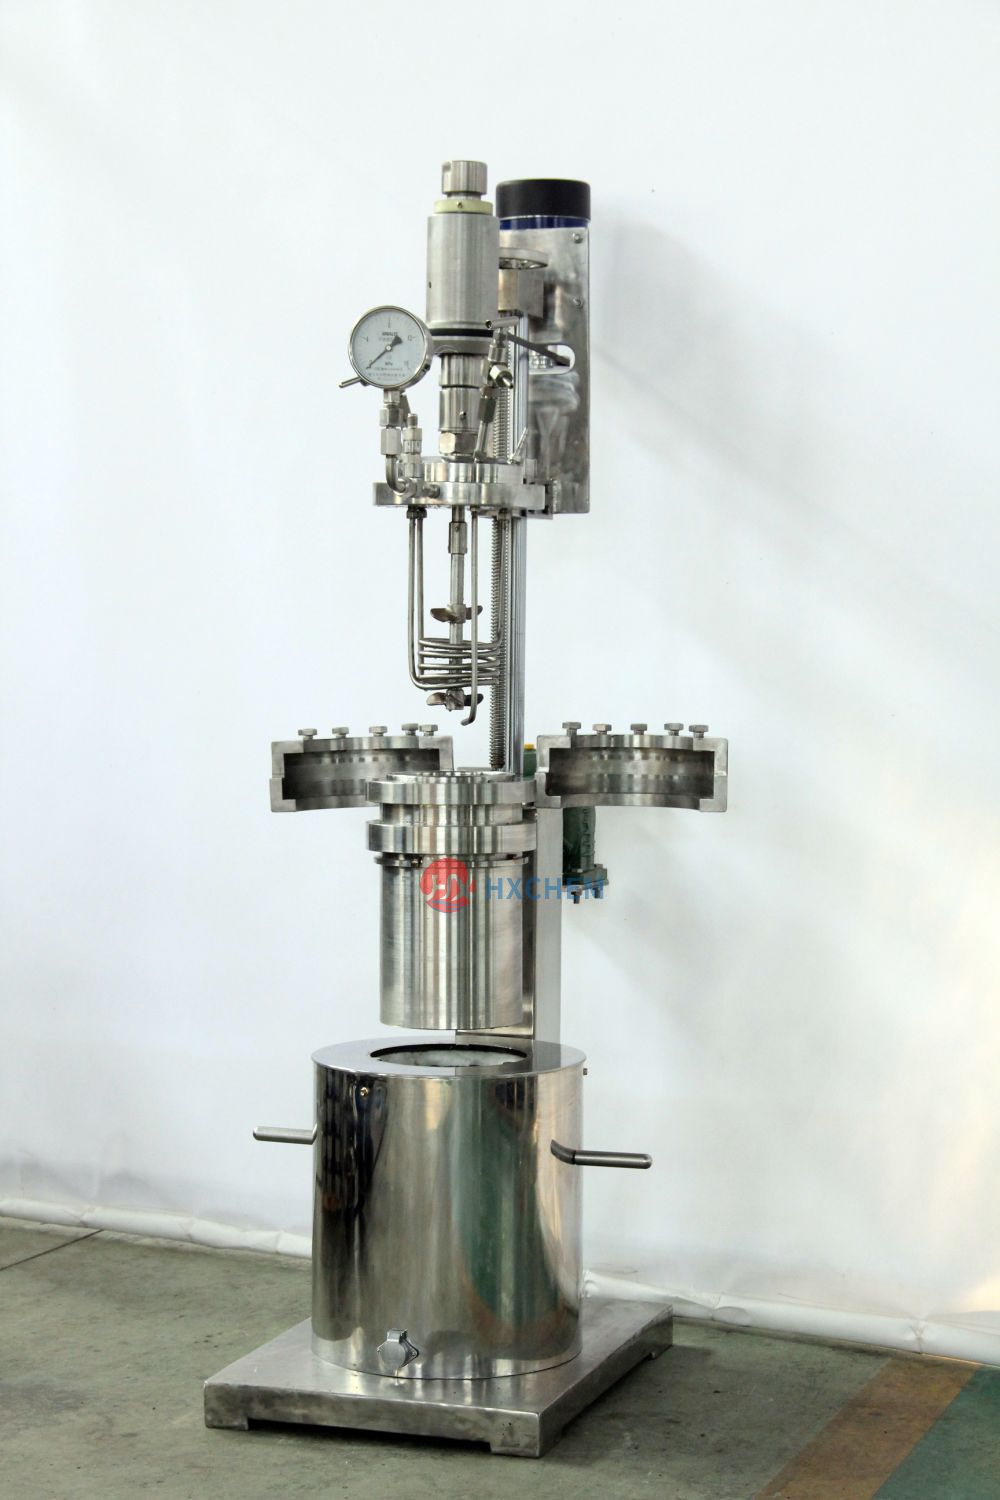 Fast opening lab pressure reactor